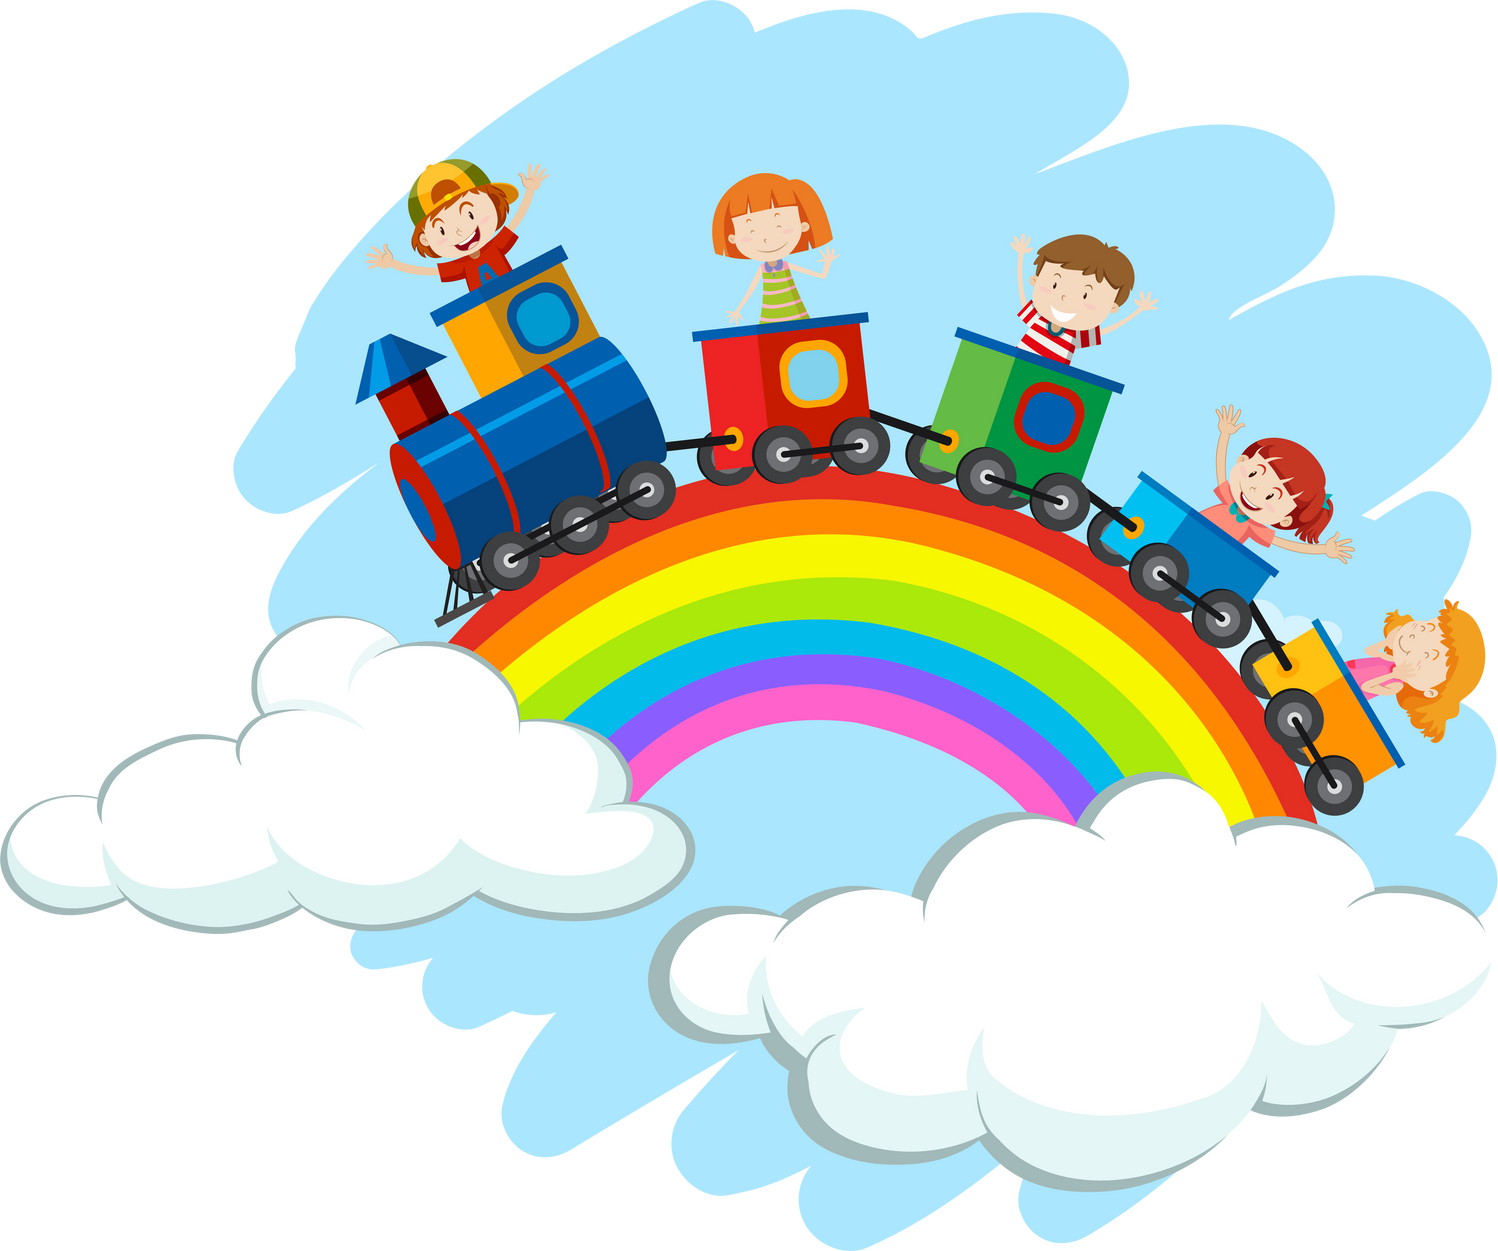 Children riding train over the rainbow